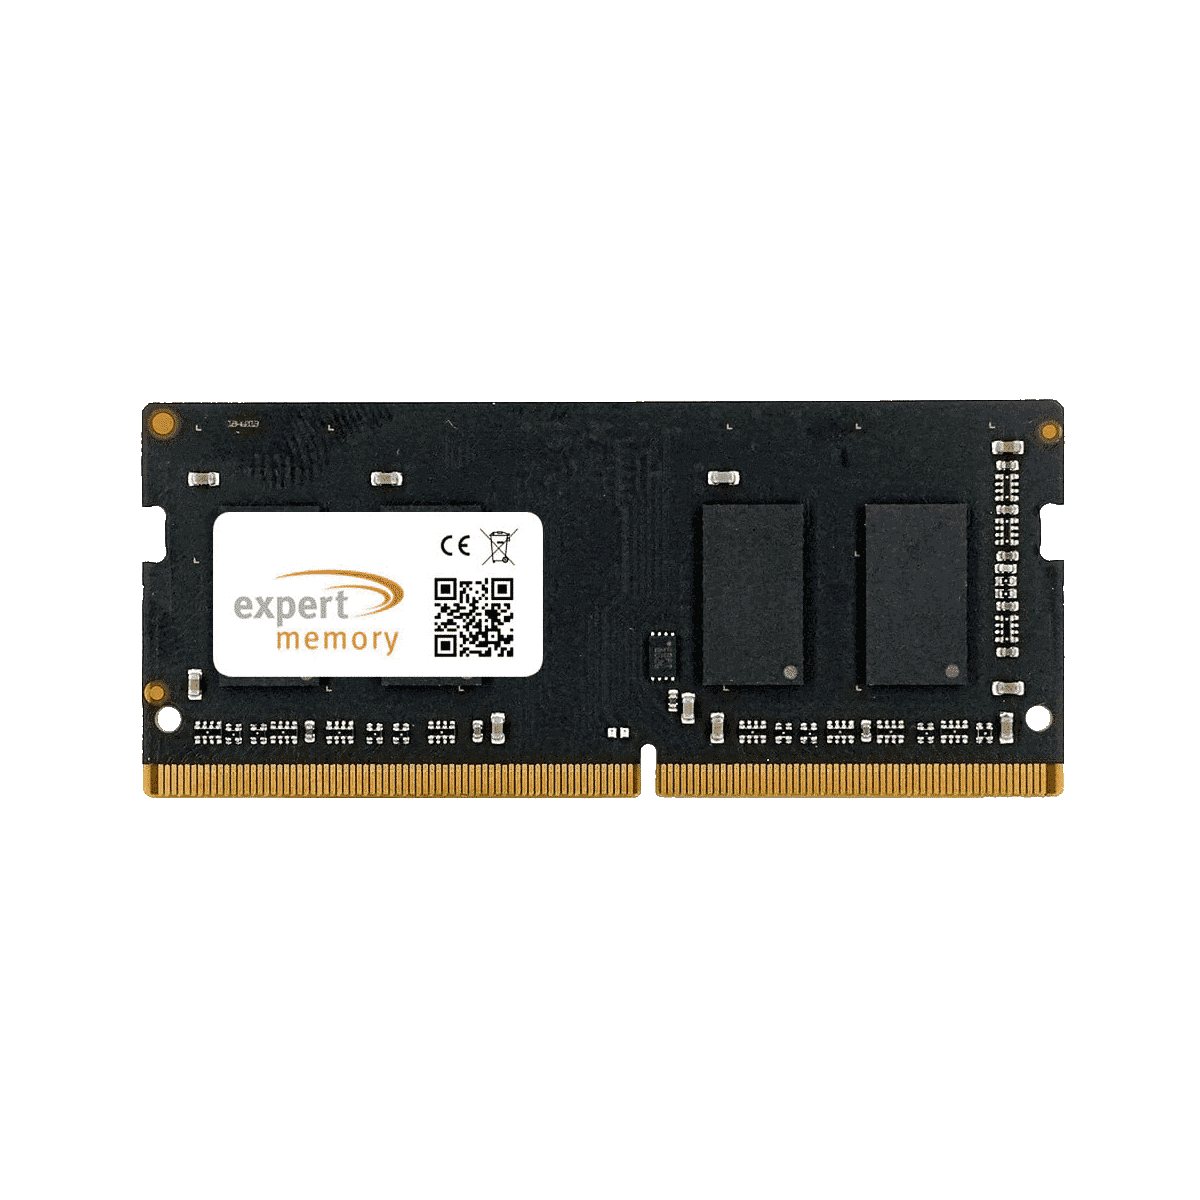 RAM 15-ay006nl DDR4 2133 GB 15 MEMORY Upgrade 2Rx8 16 16GB Laptop EXPERT HP Memory